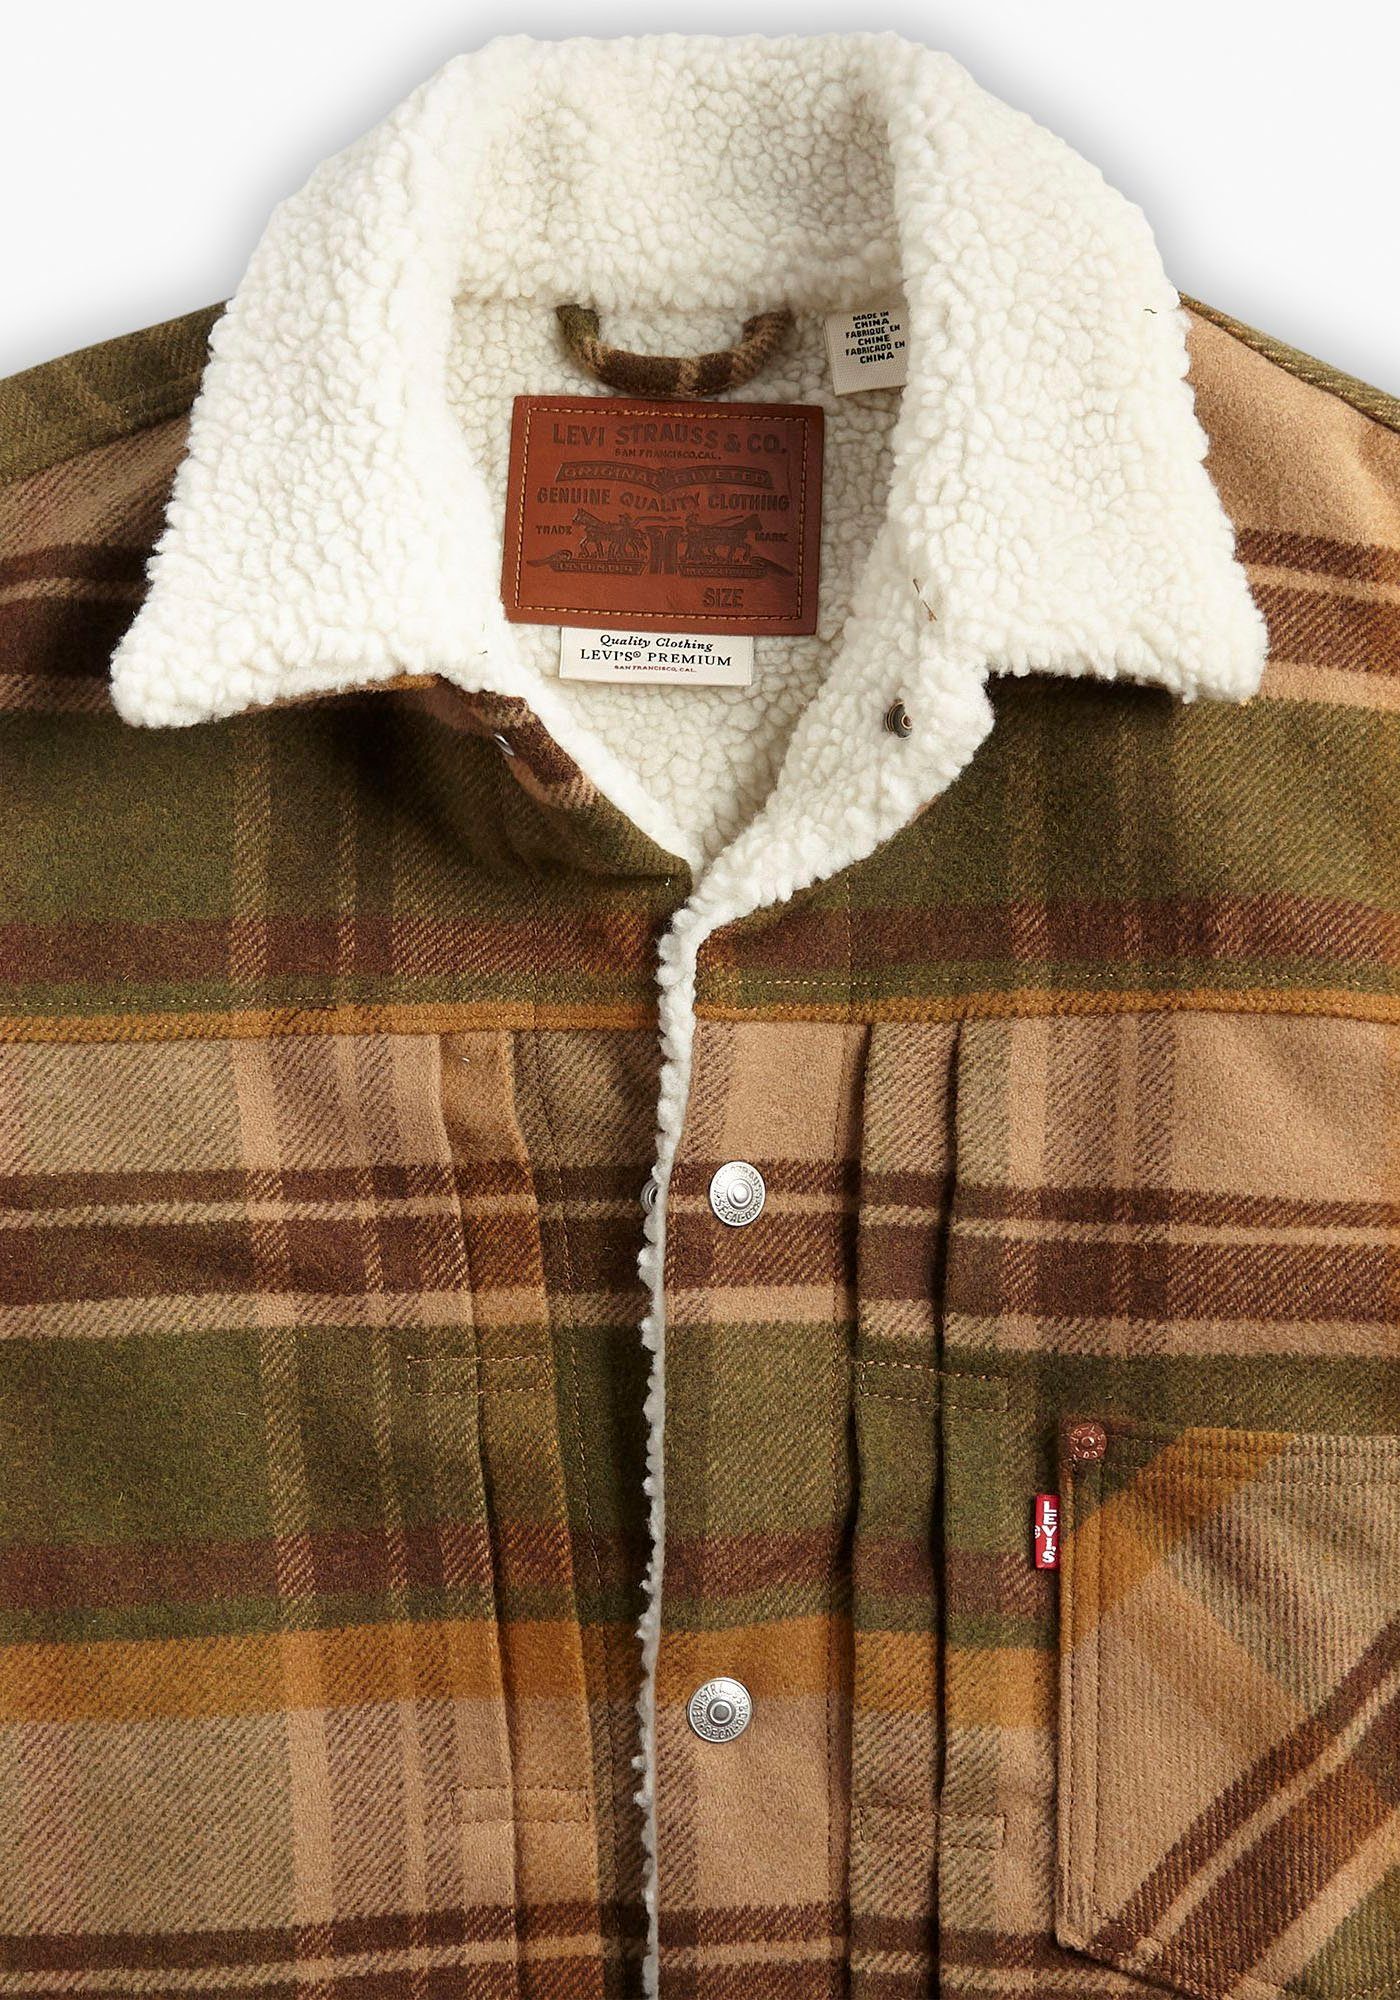 Levi's® Jeansjacke TRUCKER mit Sherpa-Futter SHERPA plaid winter warmem barold